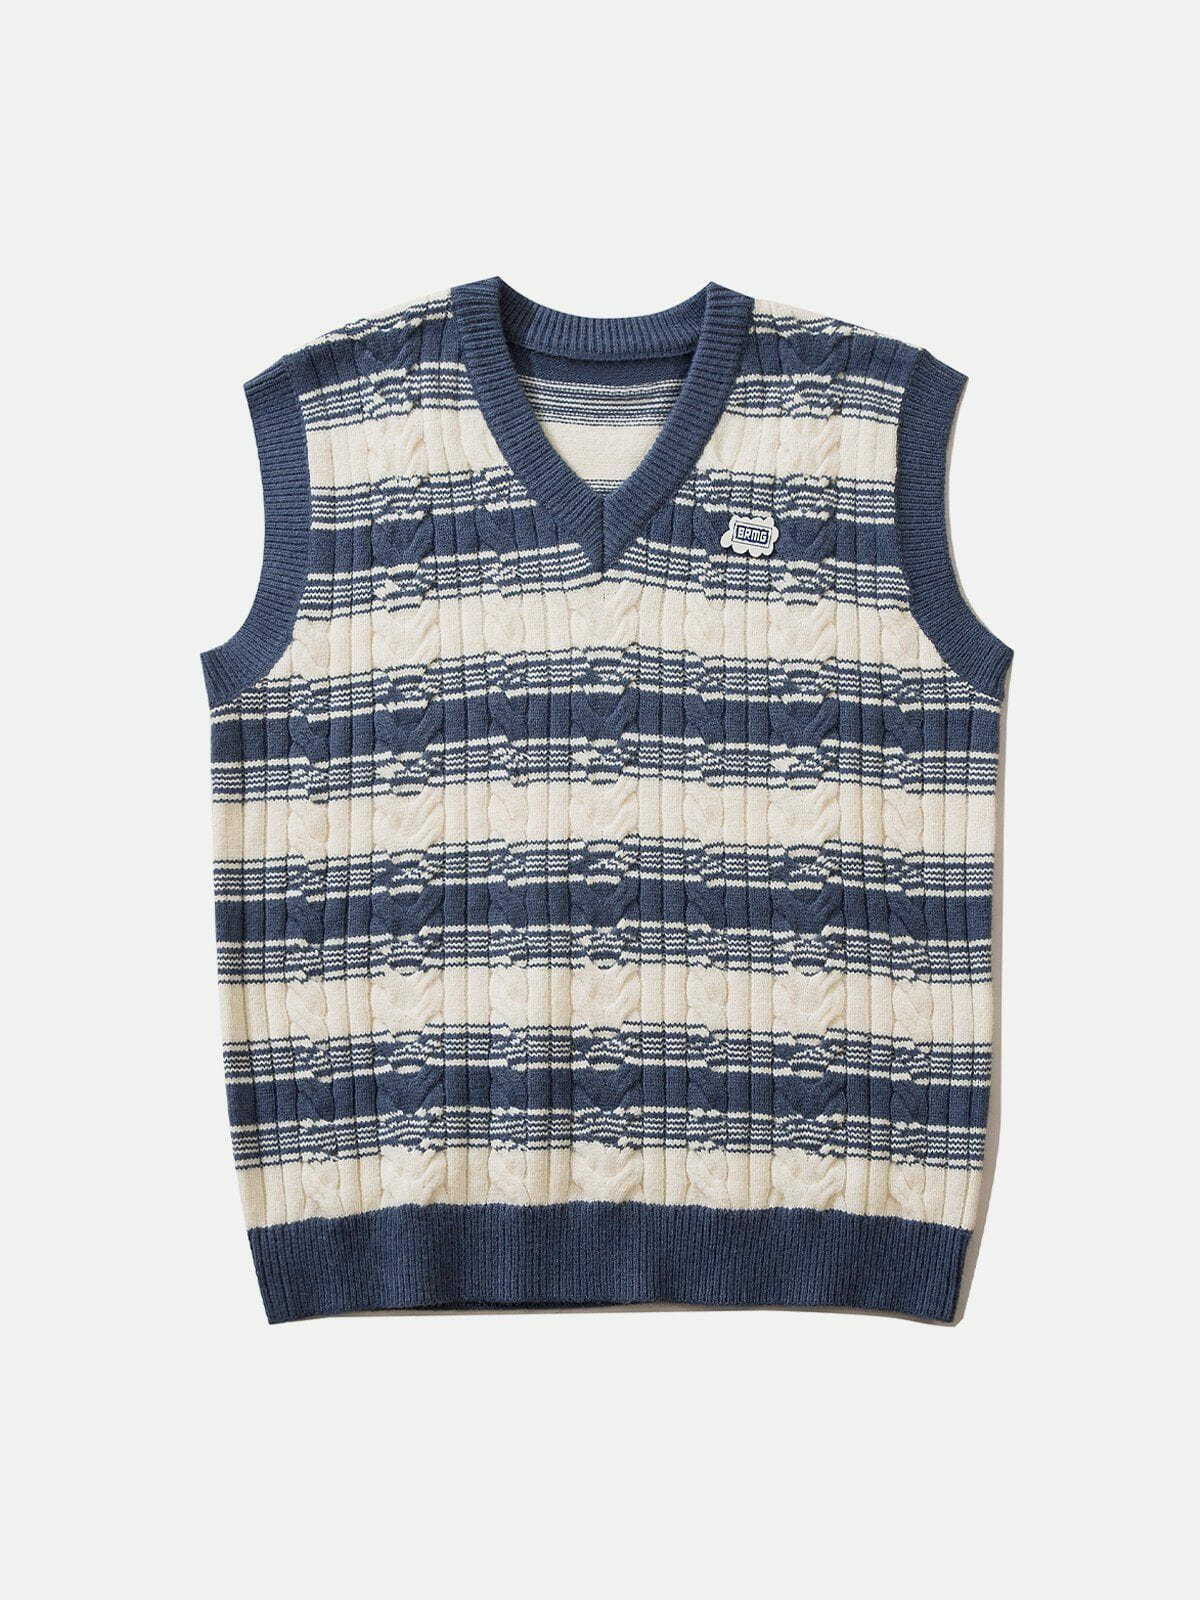 colorblock stripe sweater vest edgy retro statement piece 2081